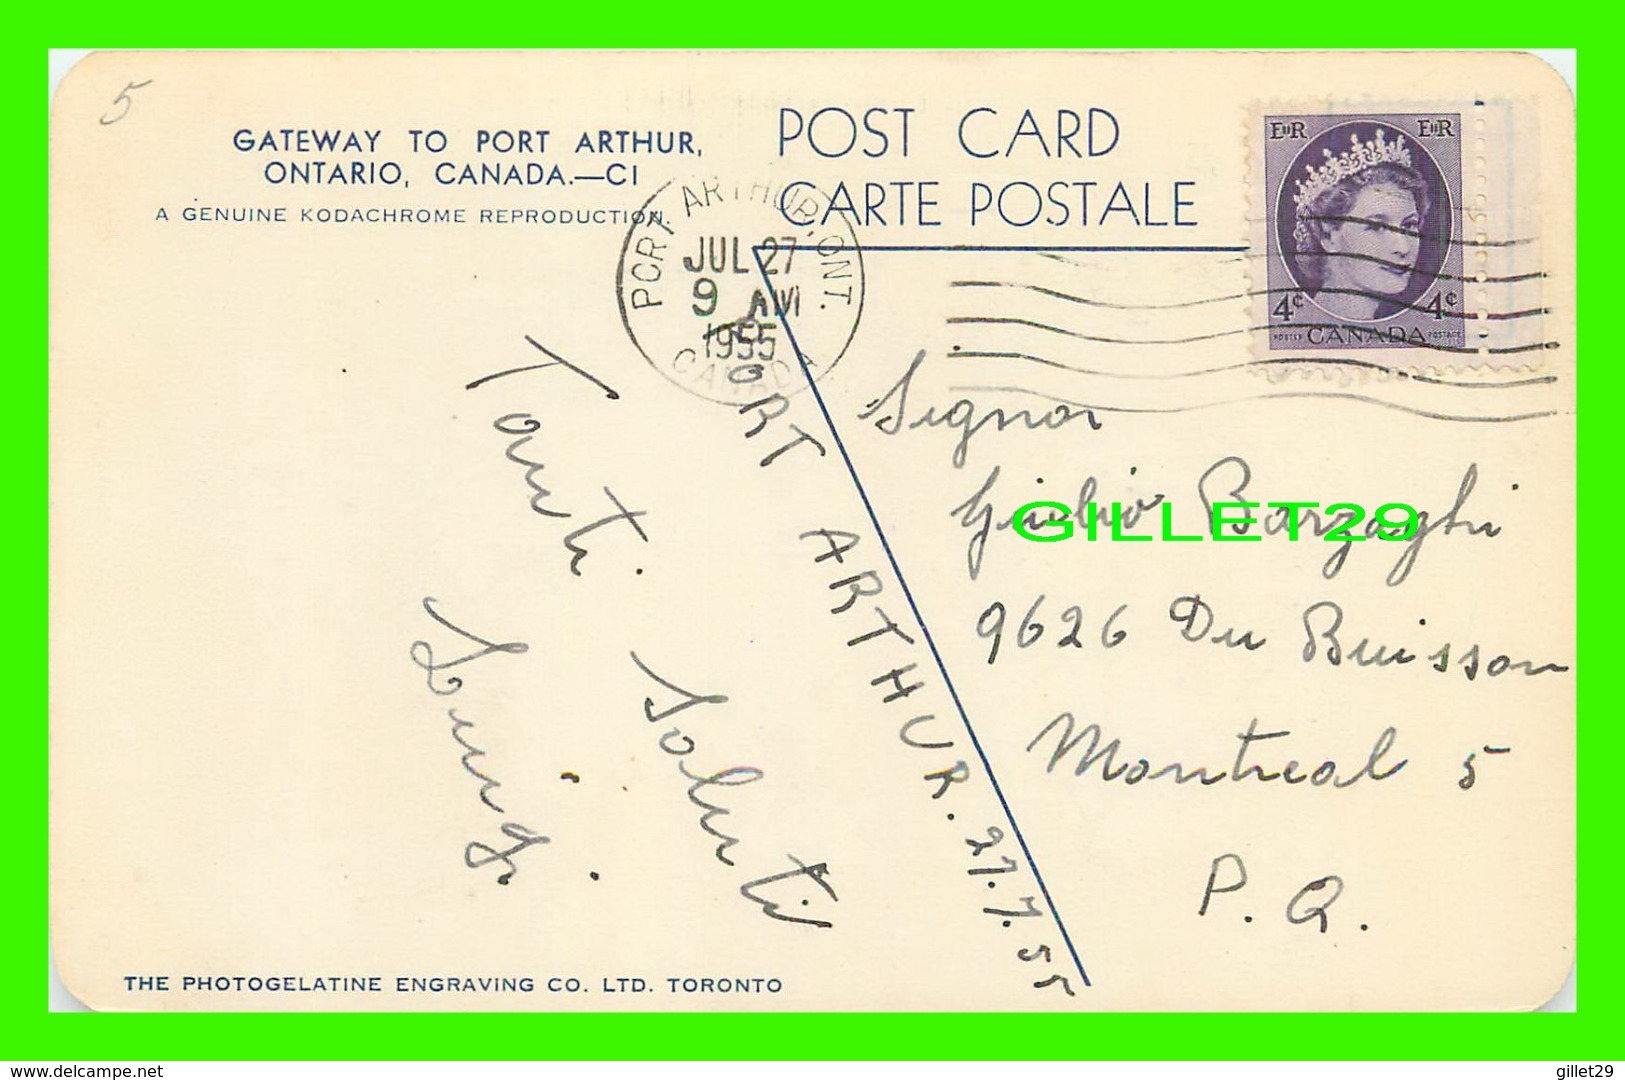 PORT ARTHUR, ONTARIO - GATEWAY TO PORT ARTHUR - TRAVEL IN 1955 - PHOTOGELATINE ENGRAVING CO LTD - - Port Arthur